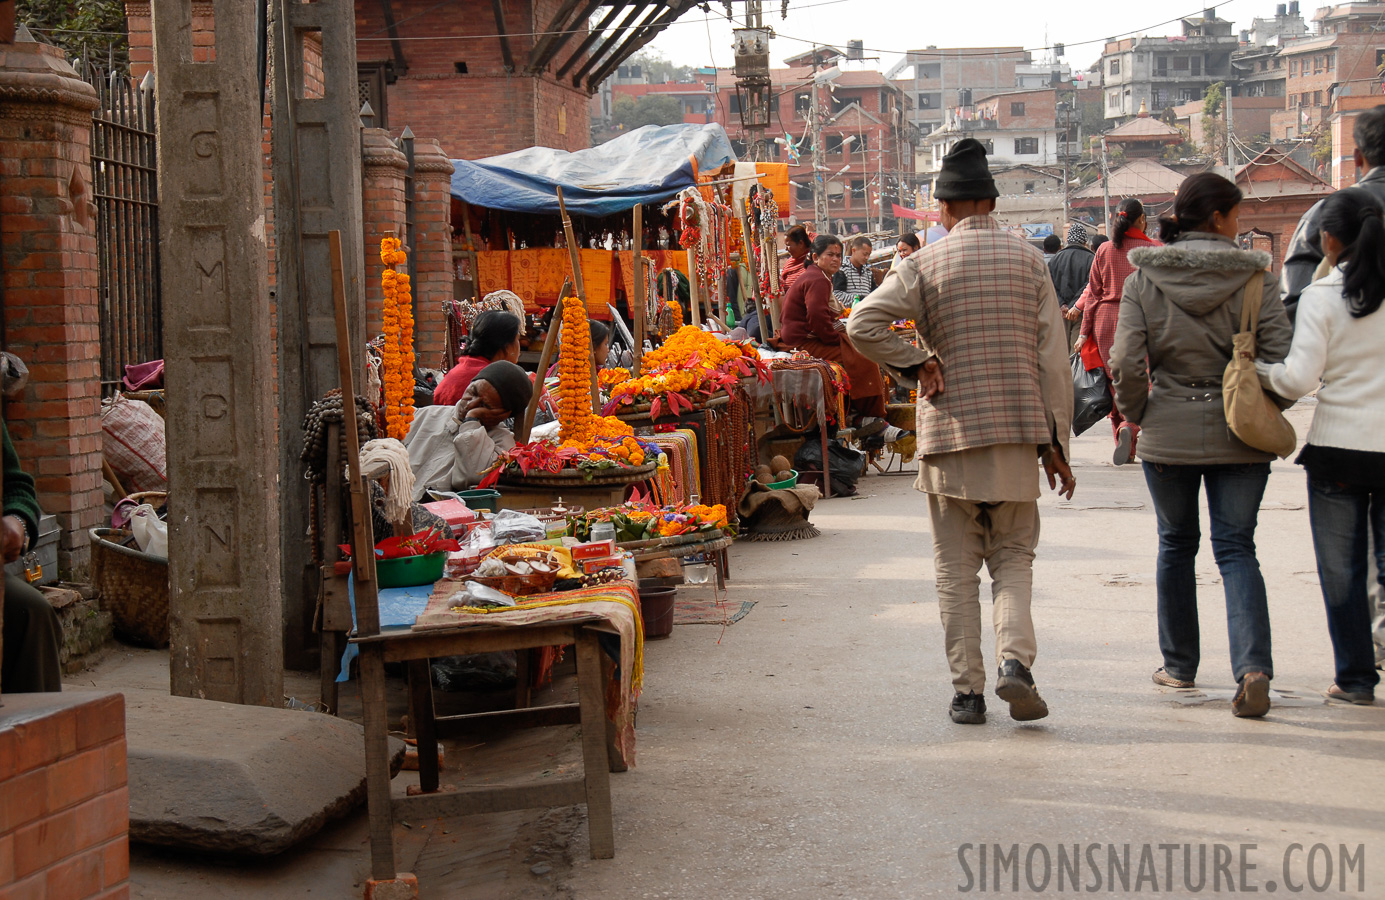 Kathmandu [50 mm, 1/160 sec at f / 7.1, ISO 200]